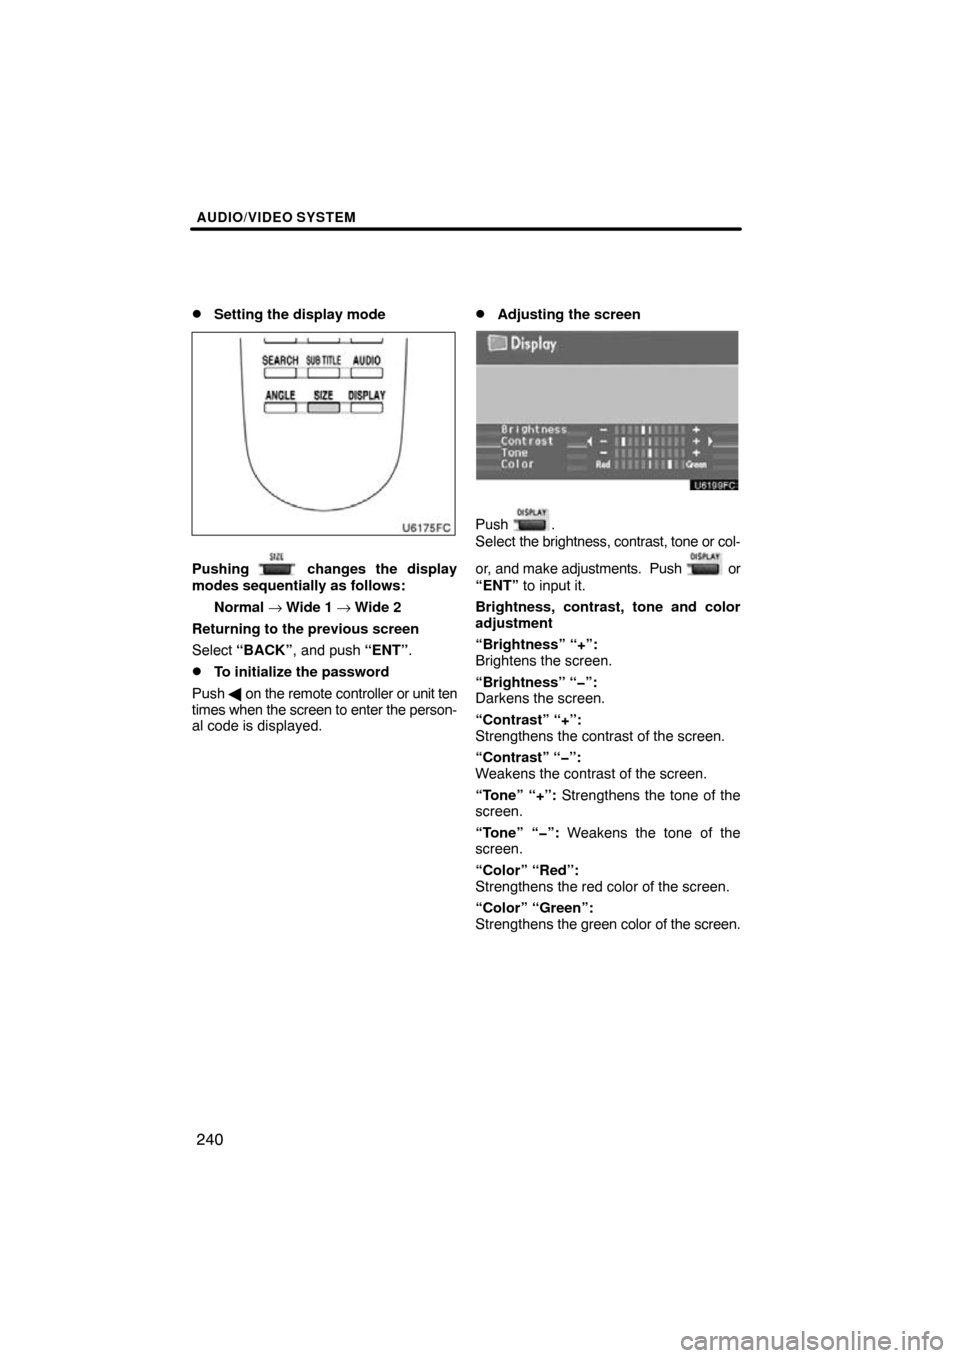 TOYOTA HIGHLANDER 2013 XU50 / 3.G Navigation Manual AUDIO/VIDEO SYSTEM
240

Setting the display mode
Pushing  changes the display
modes sequentially as follows:
Normal → Wide 1 →Wide 2
Returning to the previous screen
Select “BACK” , and push 